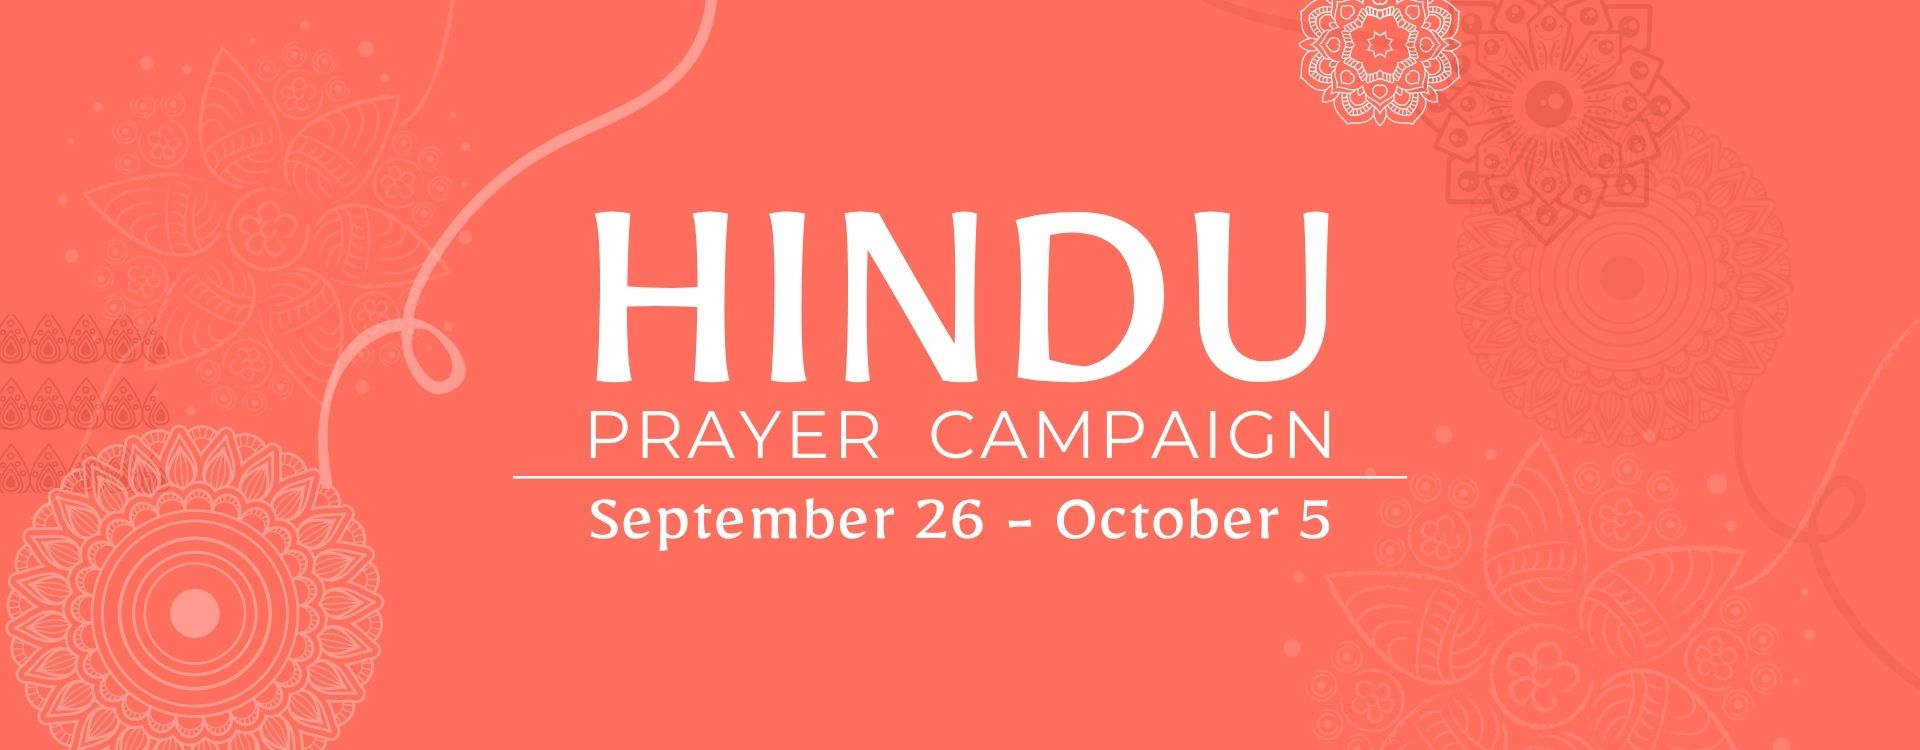 Hindu Prayer Campaign